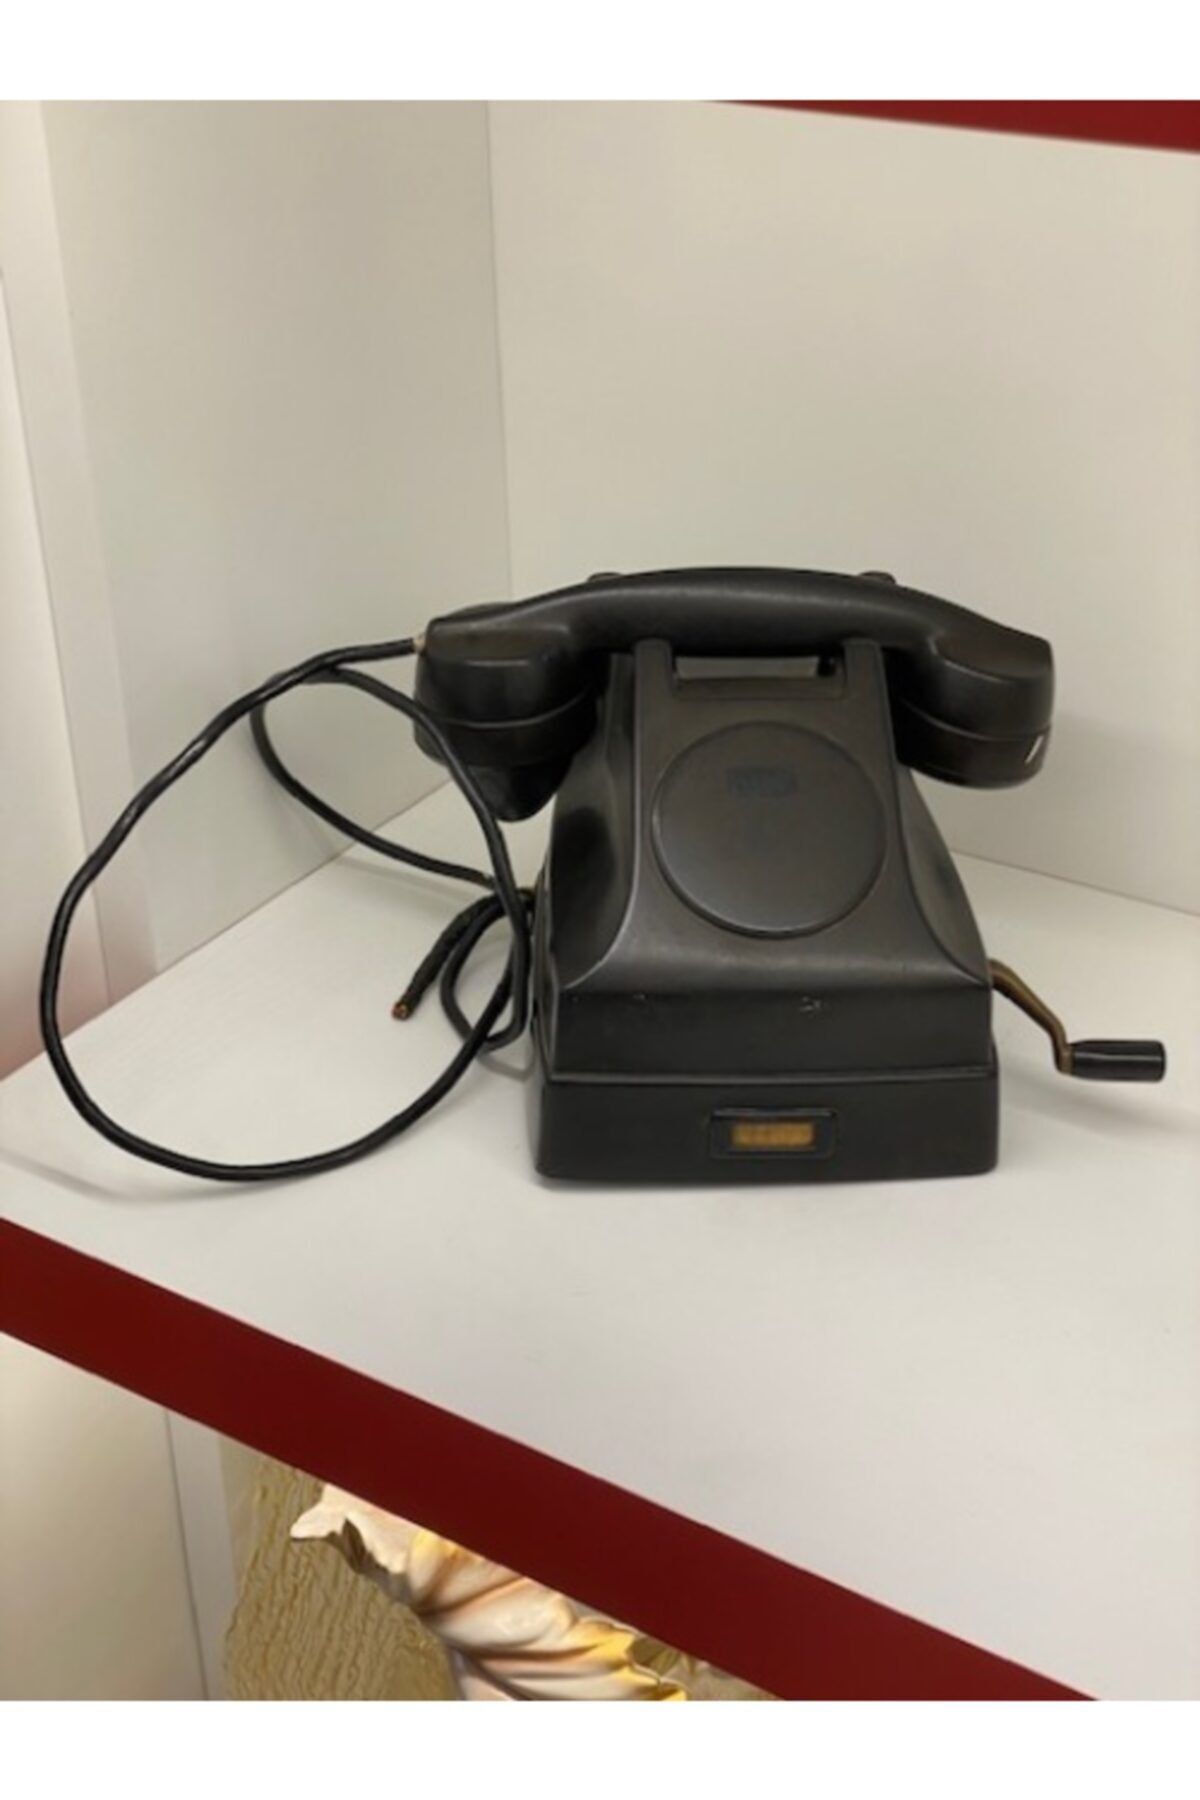 ANTİKSÜS Antika Çevirmeli Telefon 1900 Yapımı